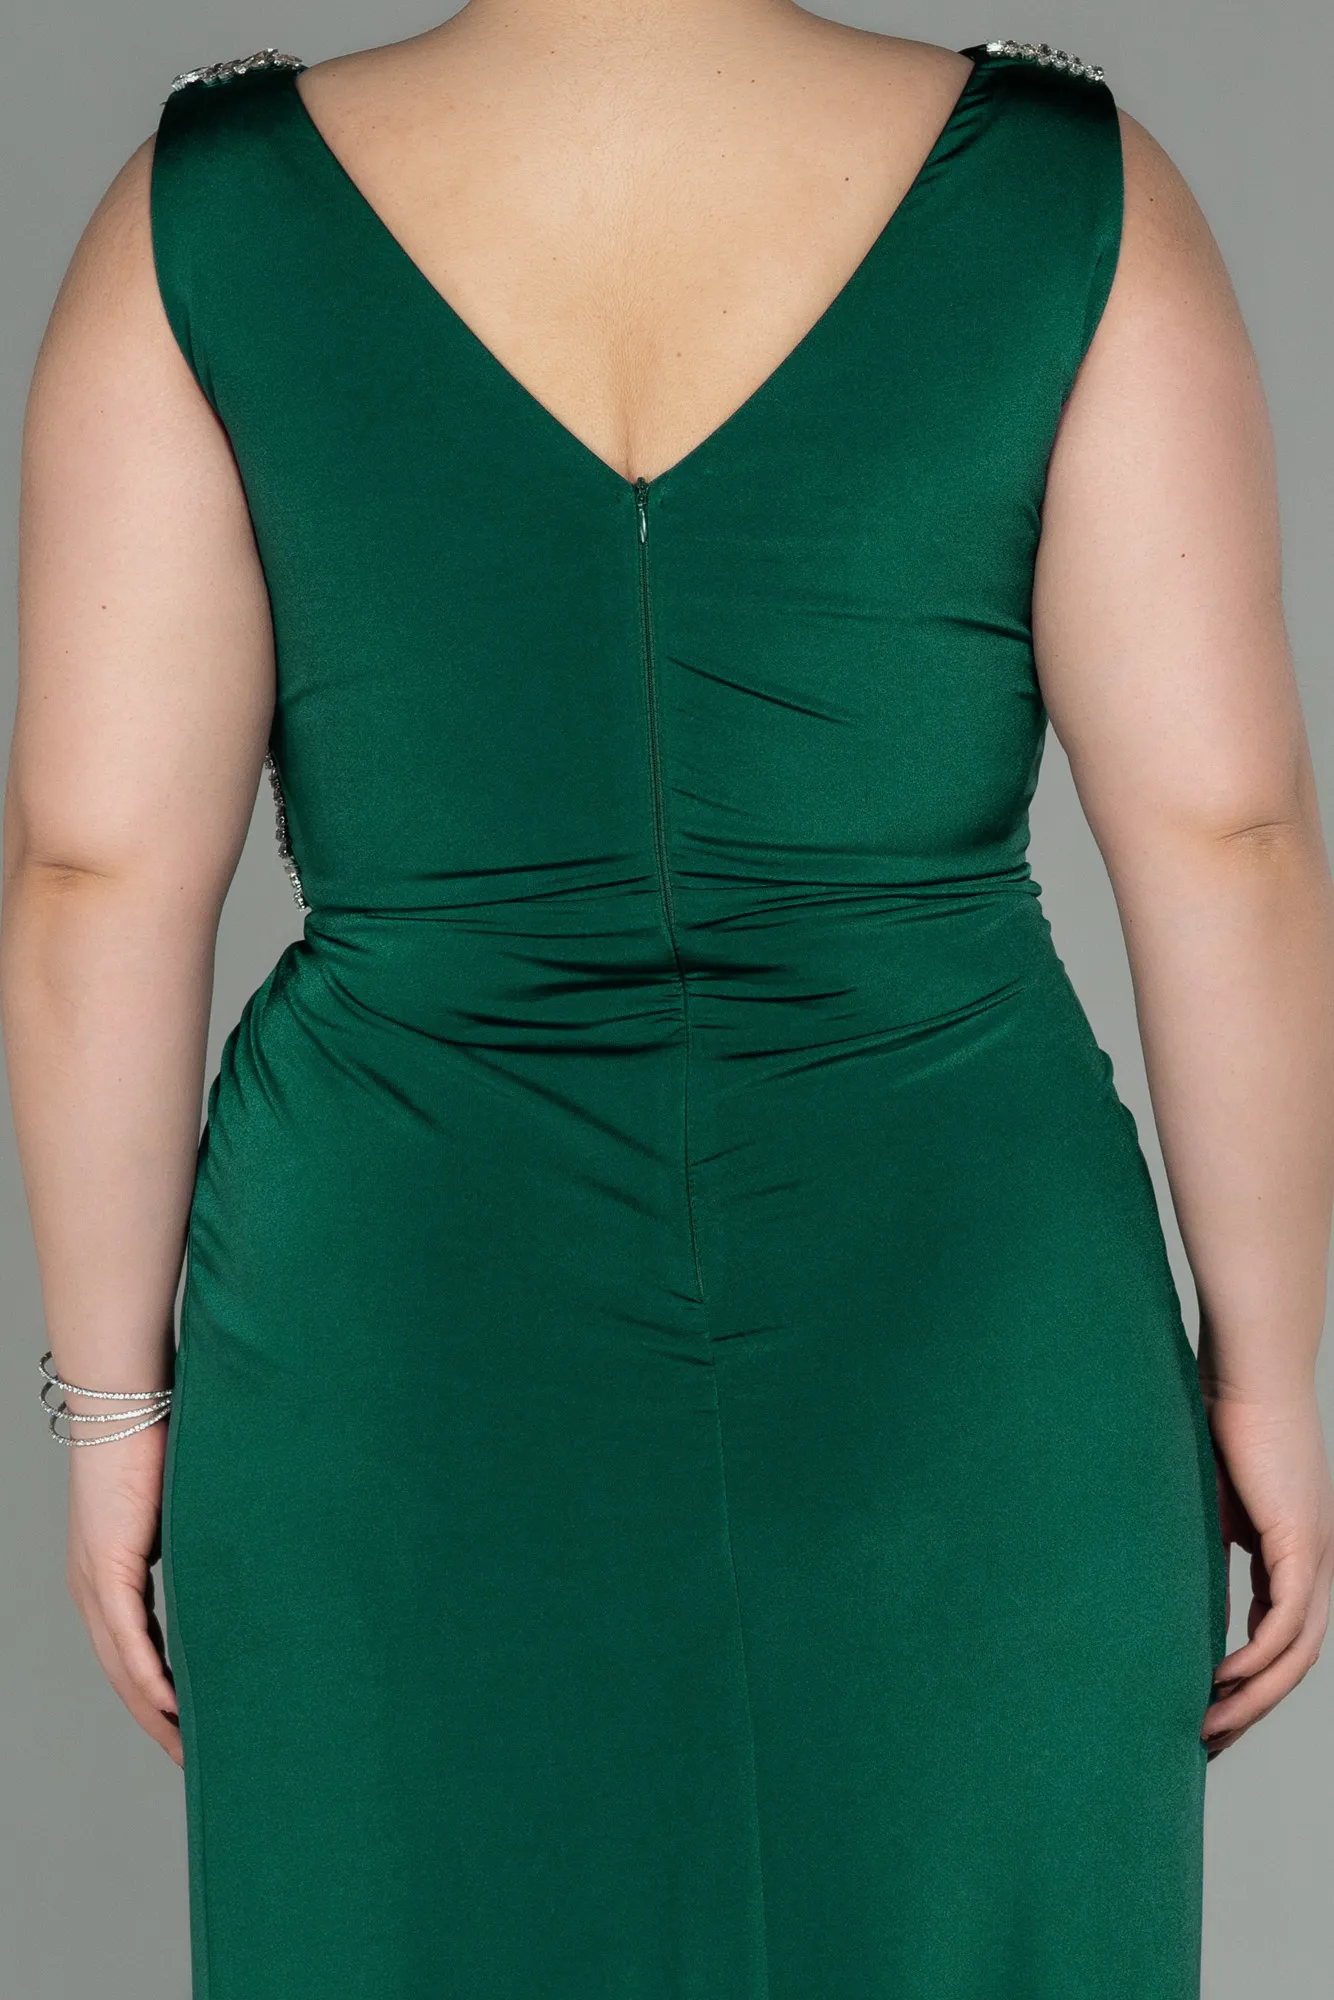 Emerald Green-Long Plus Size Evening Dress ABU2931